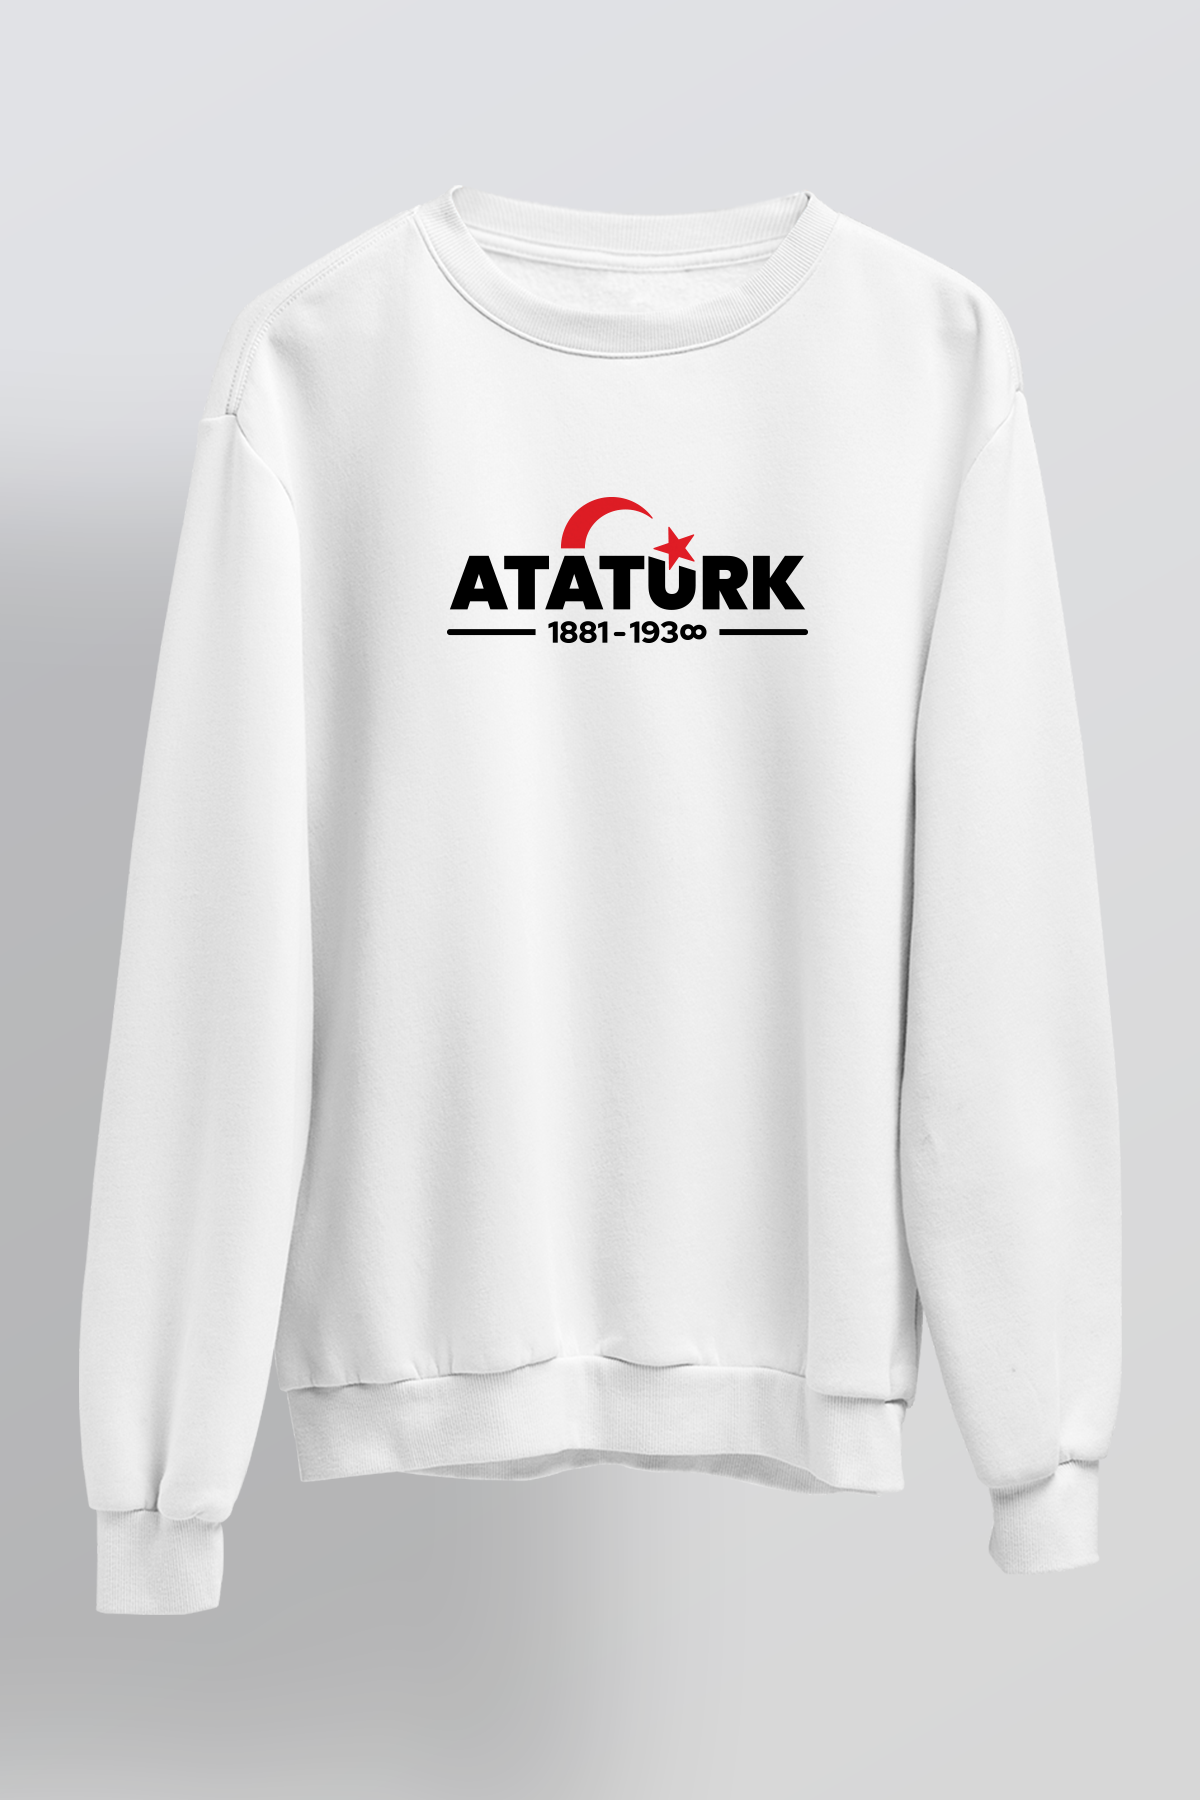 Atatürk - Sweatshirt